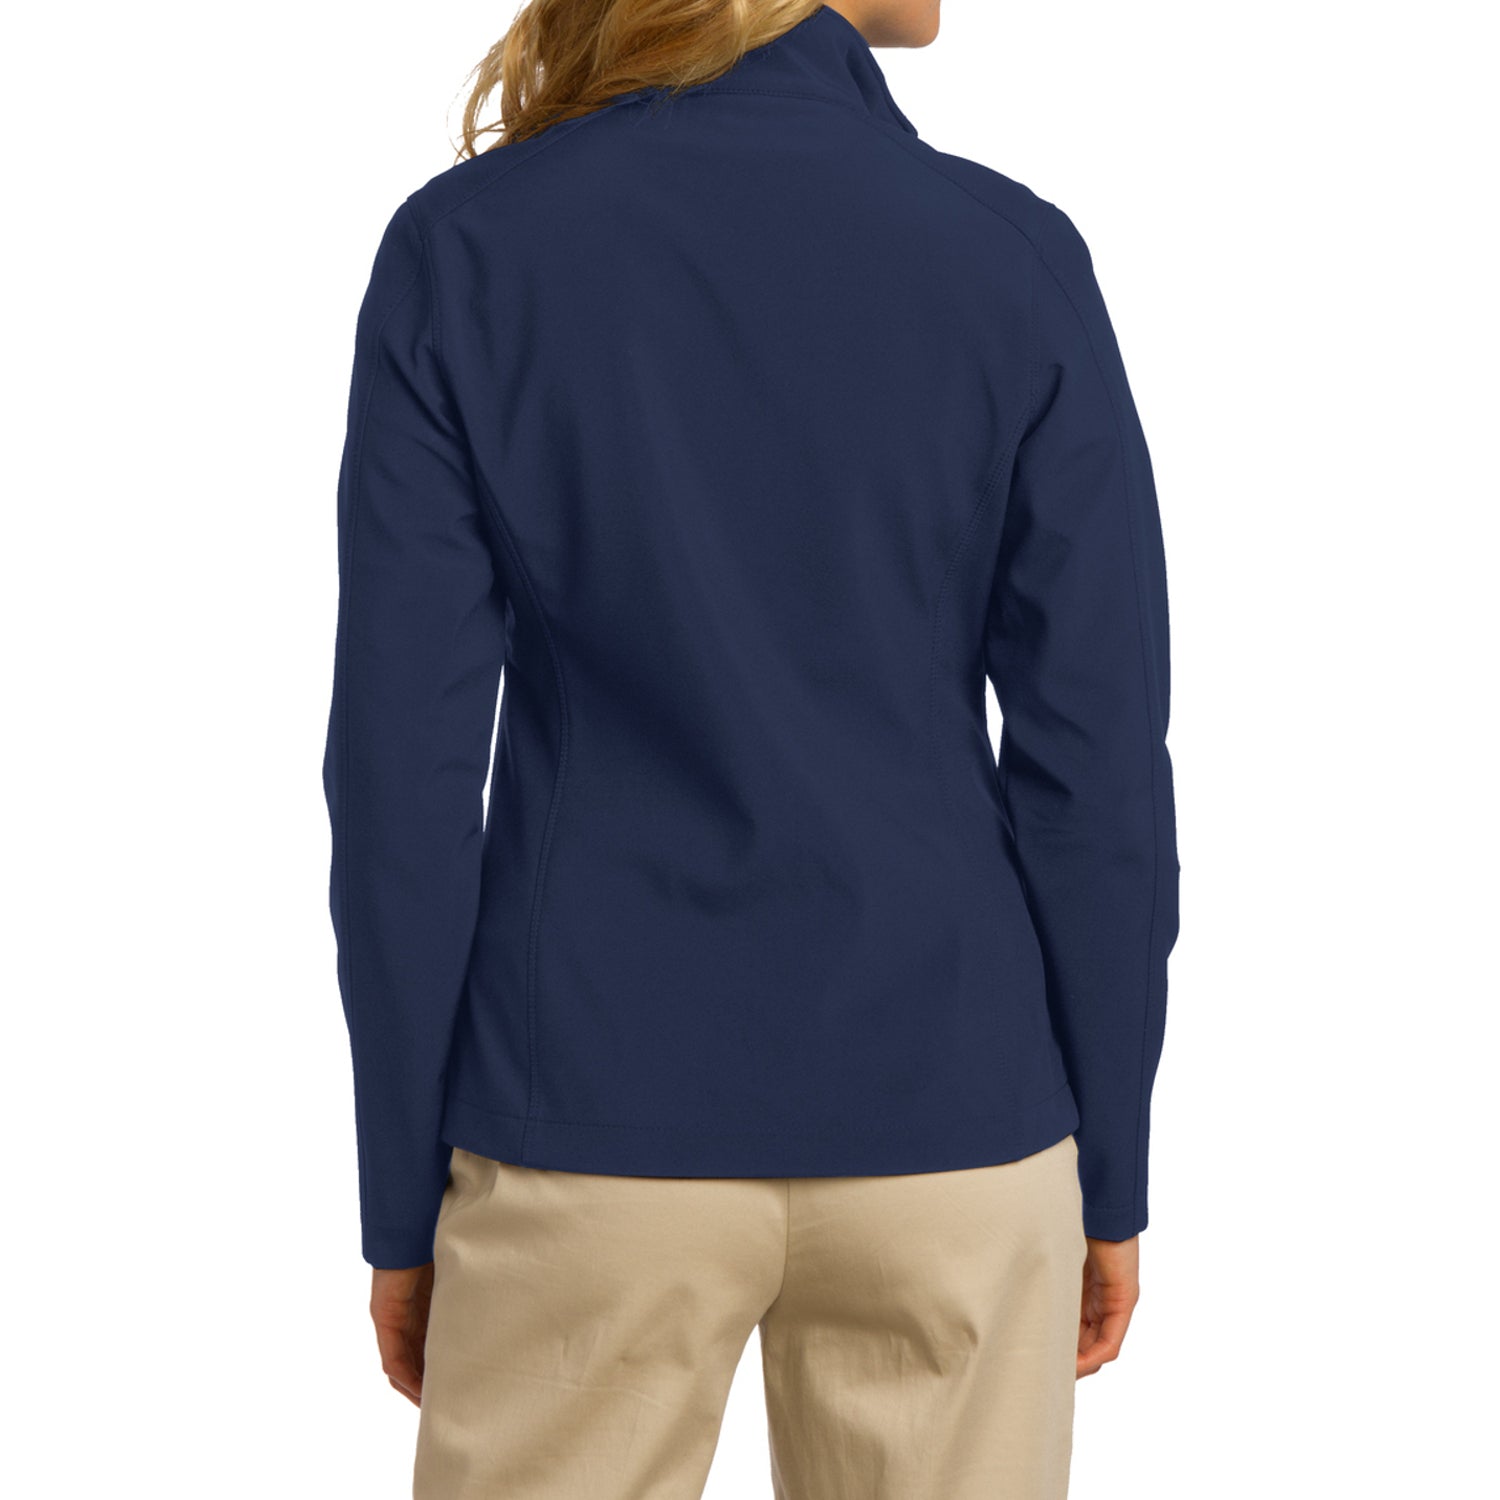 Mafoose Women's Core Soft Shell Jacket Dress Blue Navy